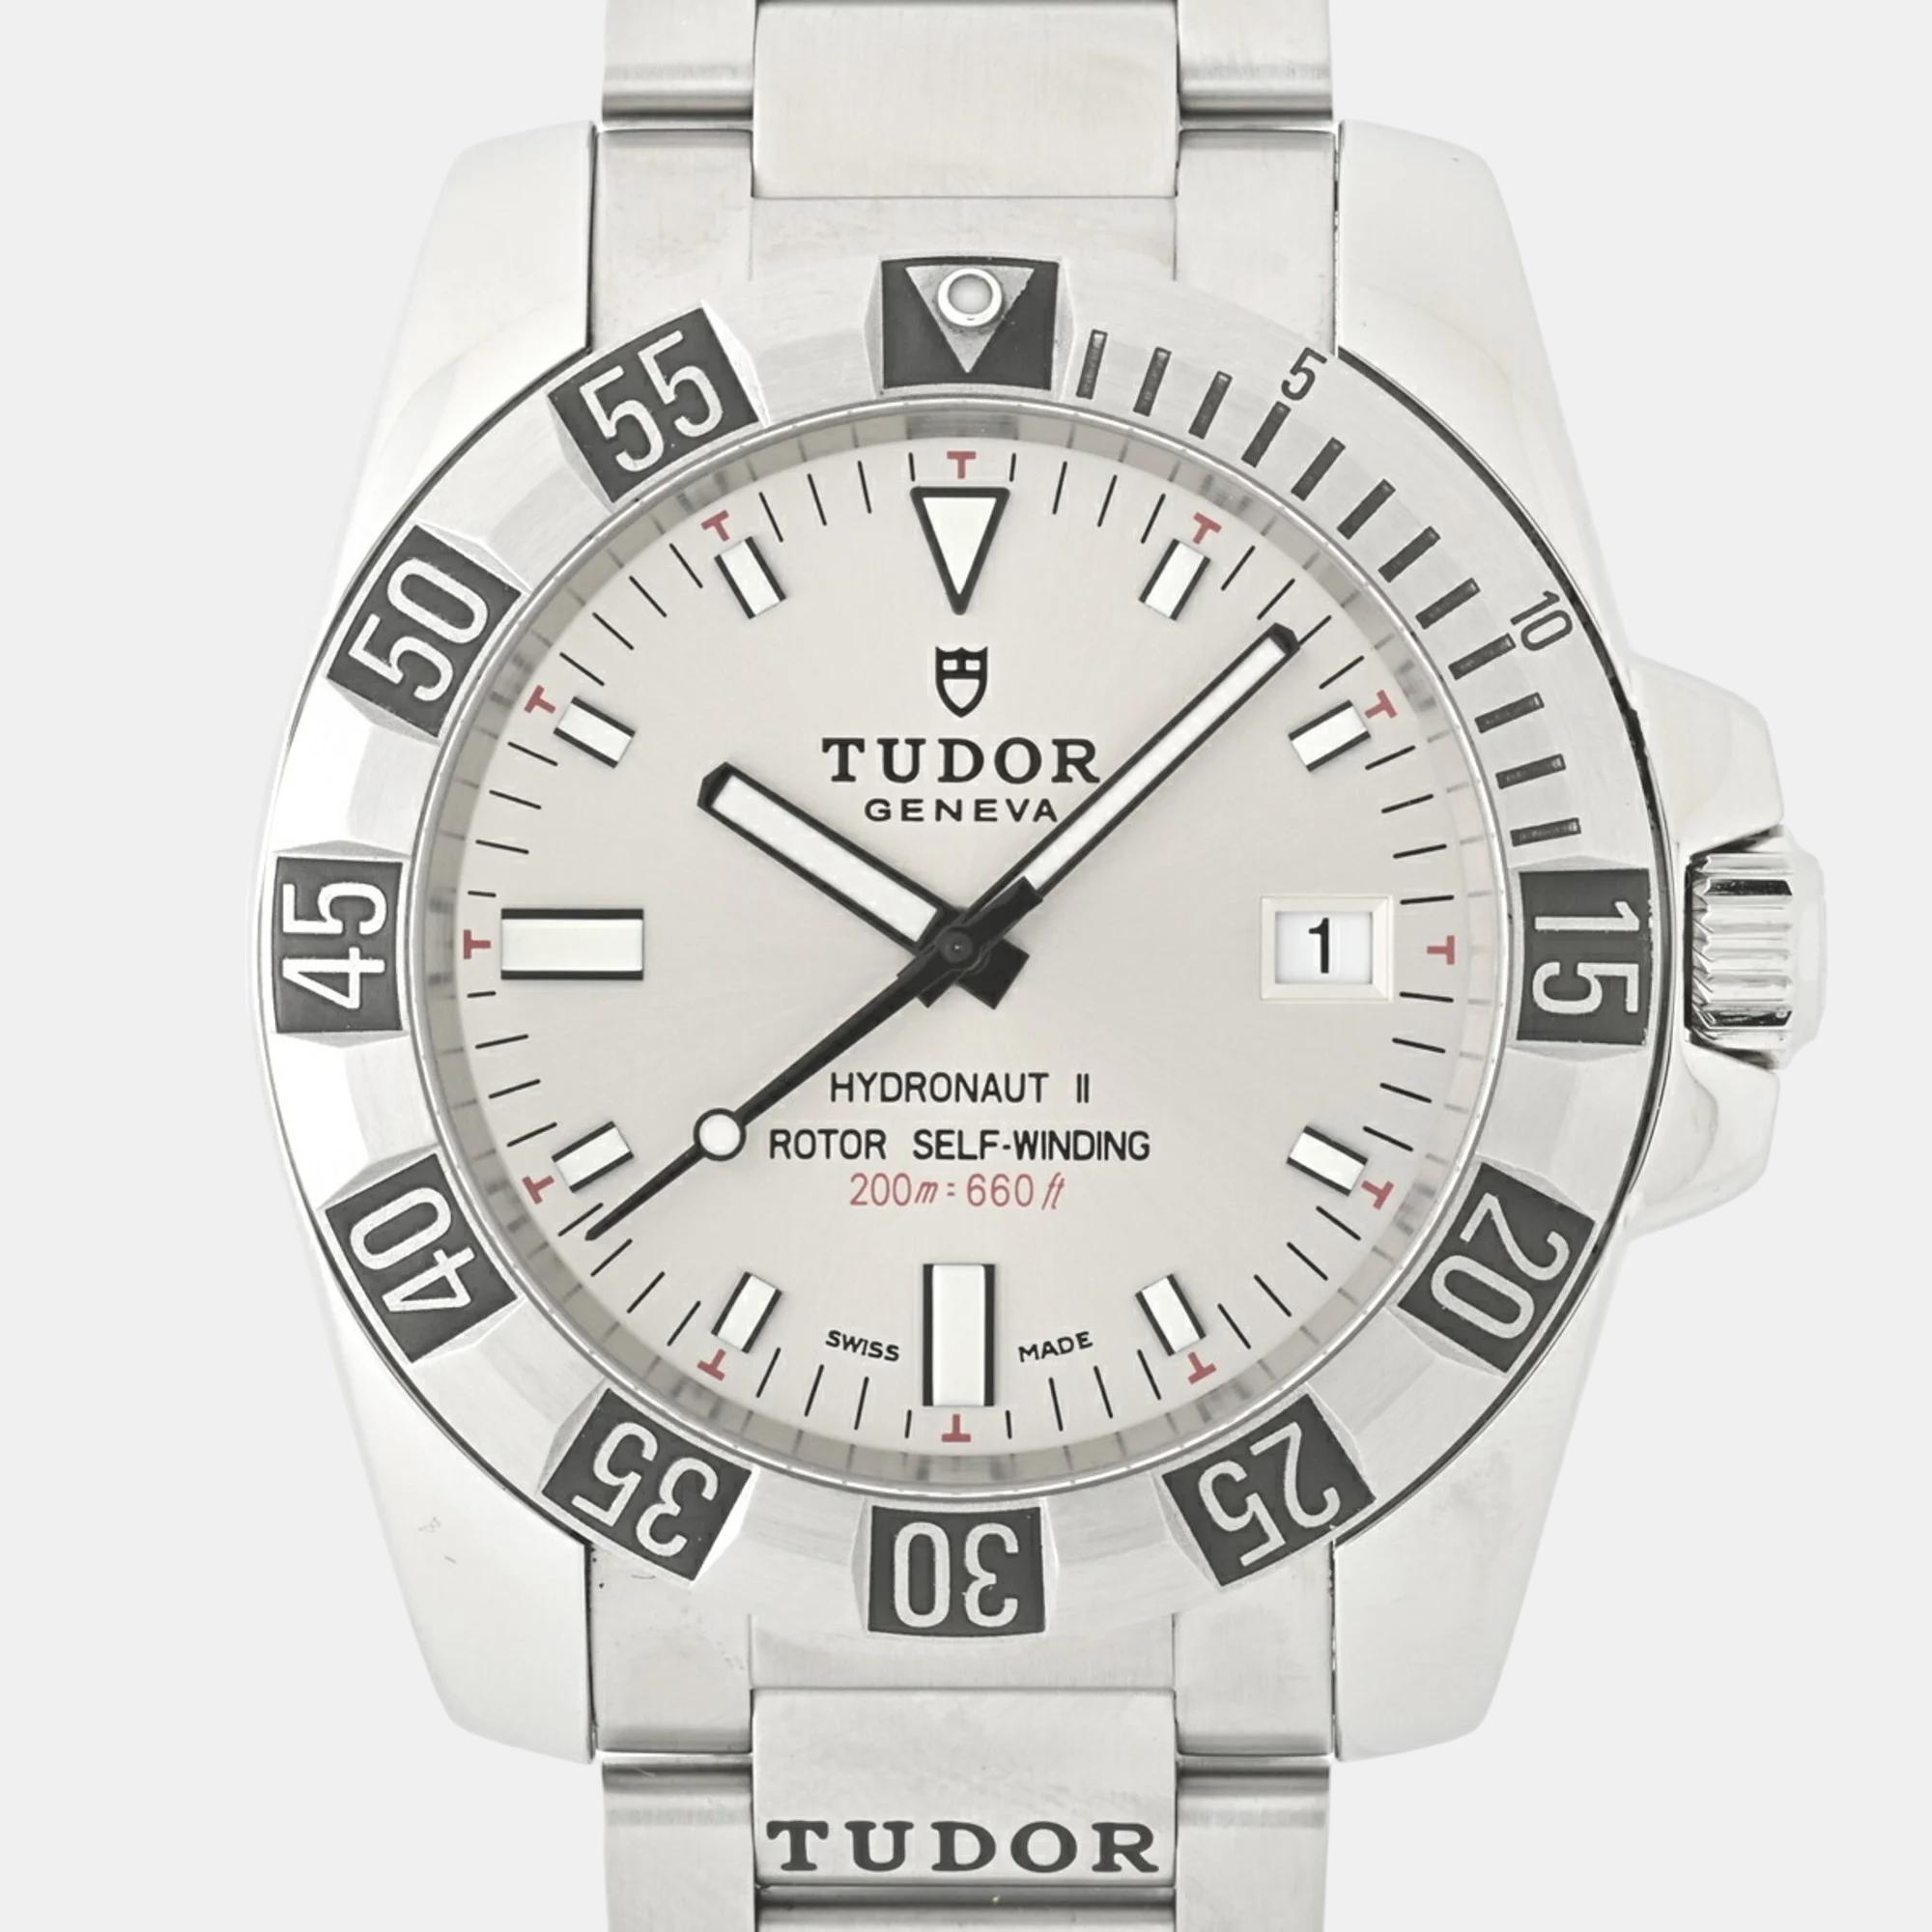 Tudor silver stainless steel  hydronaut ii 20040 automatic men's wristwatch 40 mm